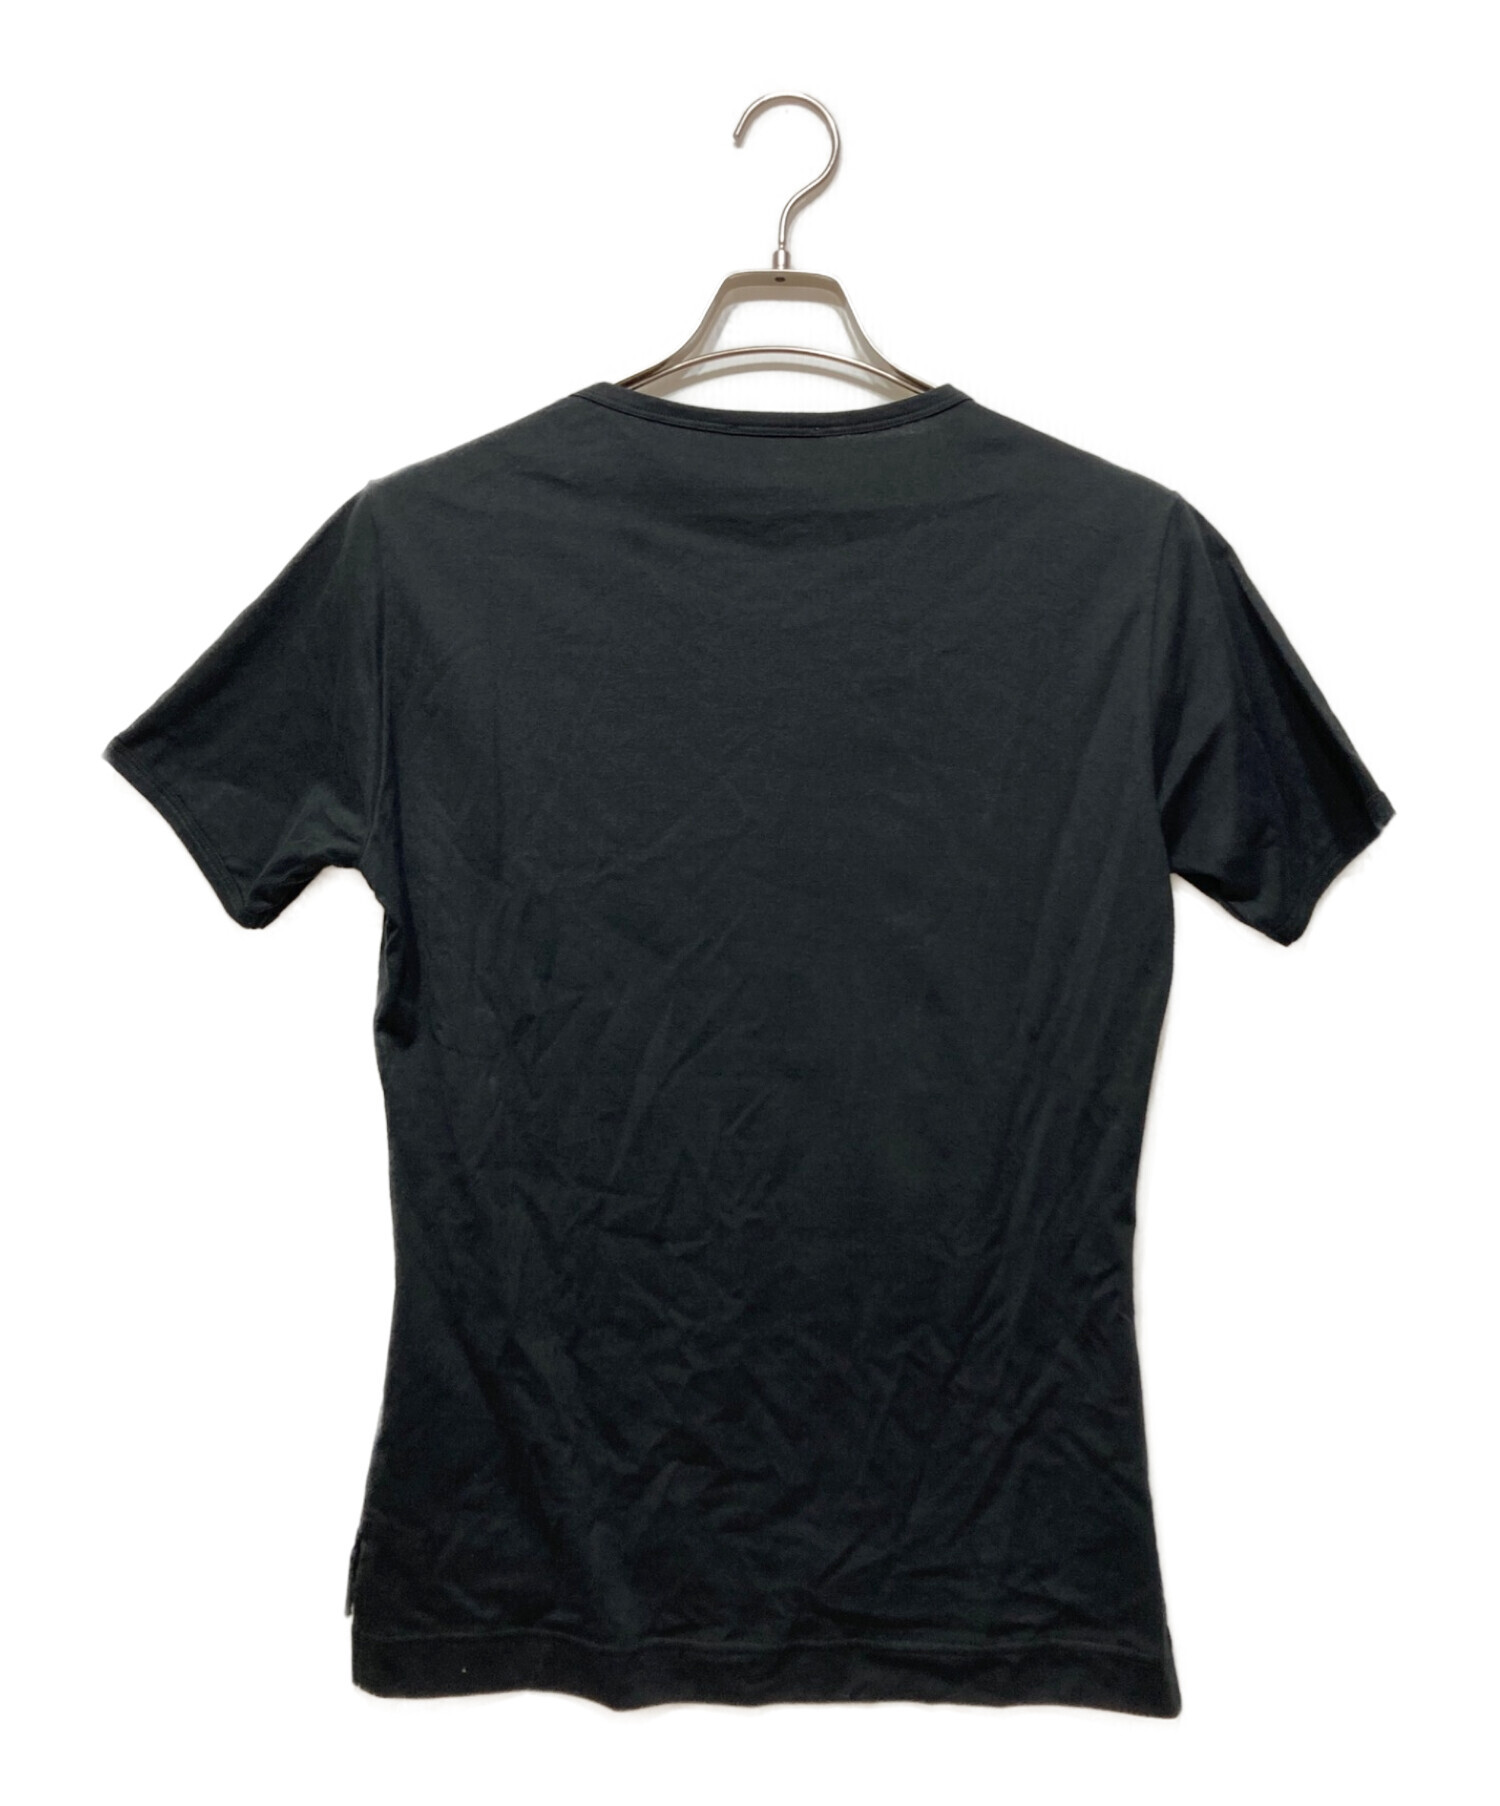 Vivienne Westwood man (ヴィヴィアン ウェストウッド マン) クリーピー ベアプリントTシャツ ブラック サイズ:44